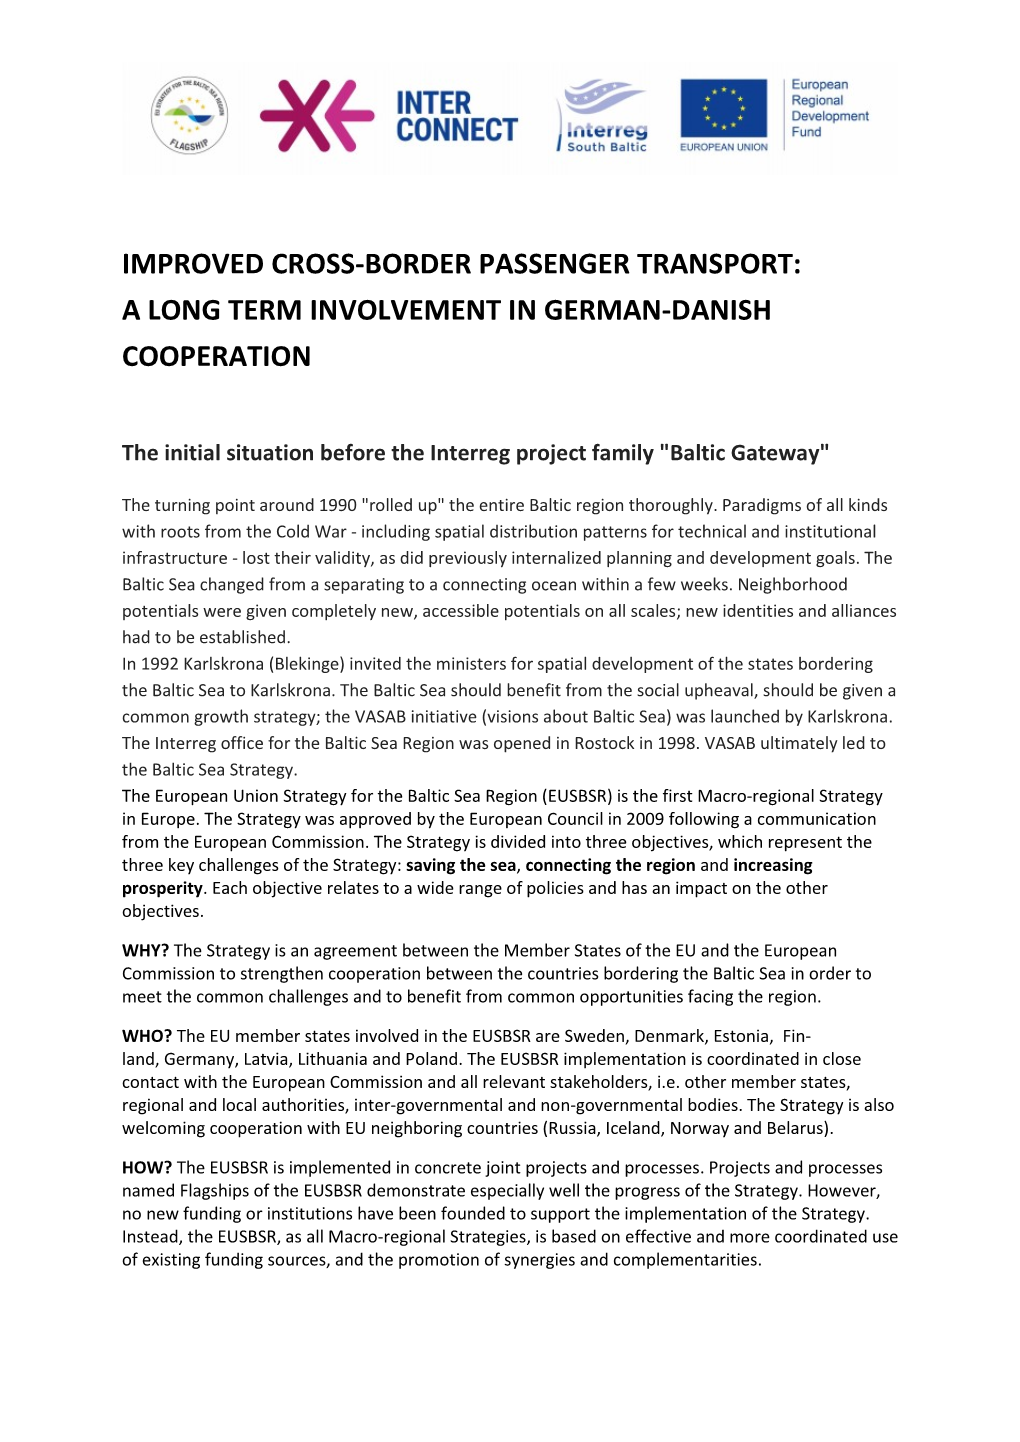 Improved Cross-Border Passenger Transport: a Long Term Involvement in German-Danish Cooperation